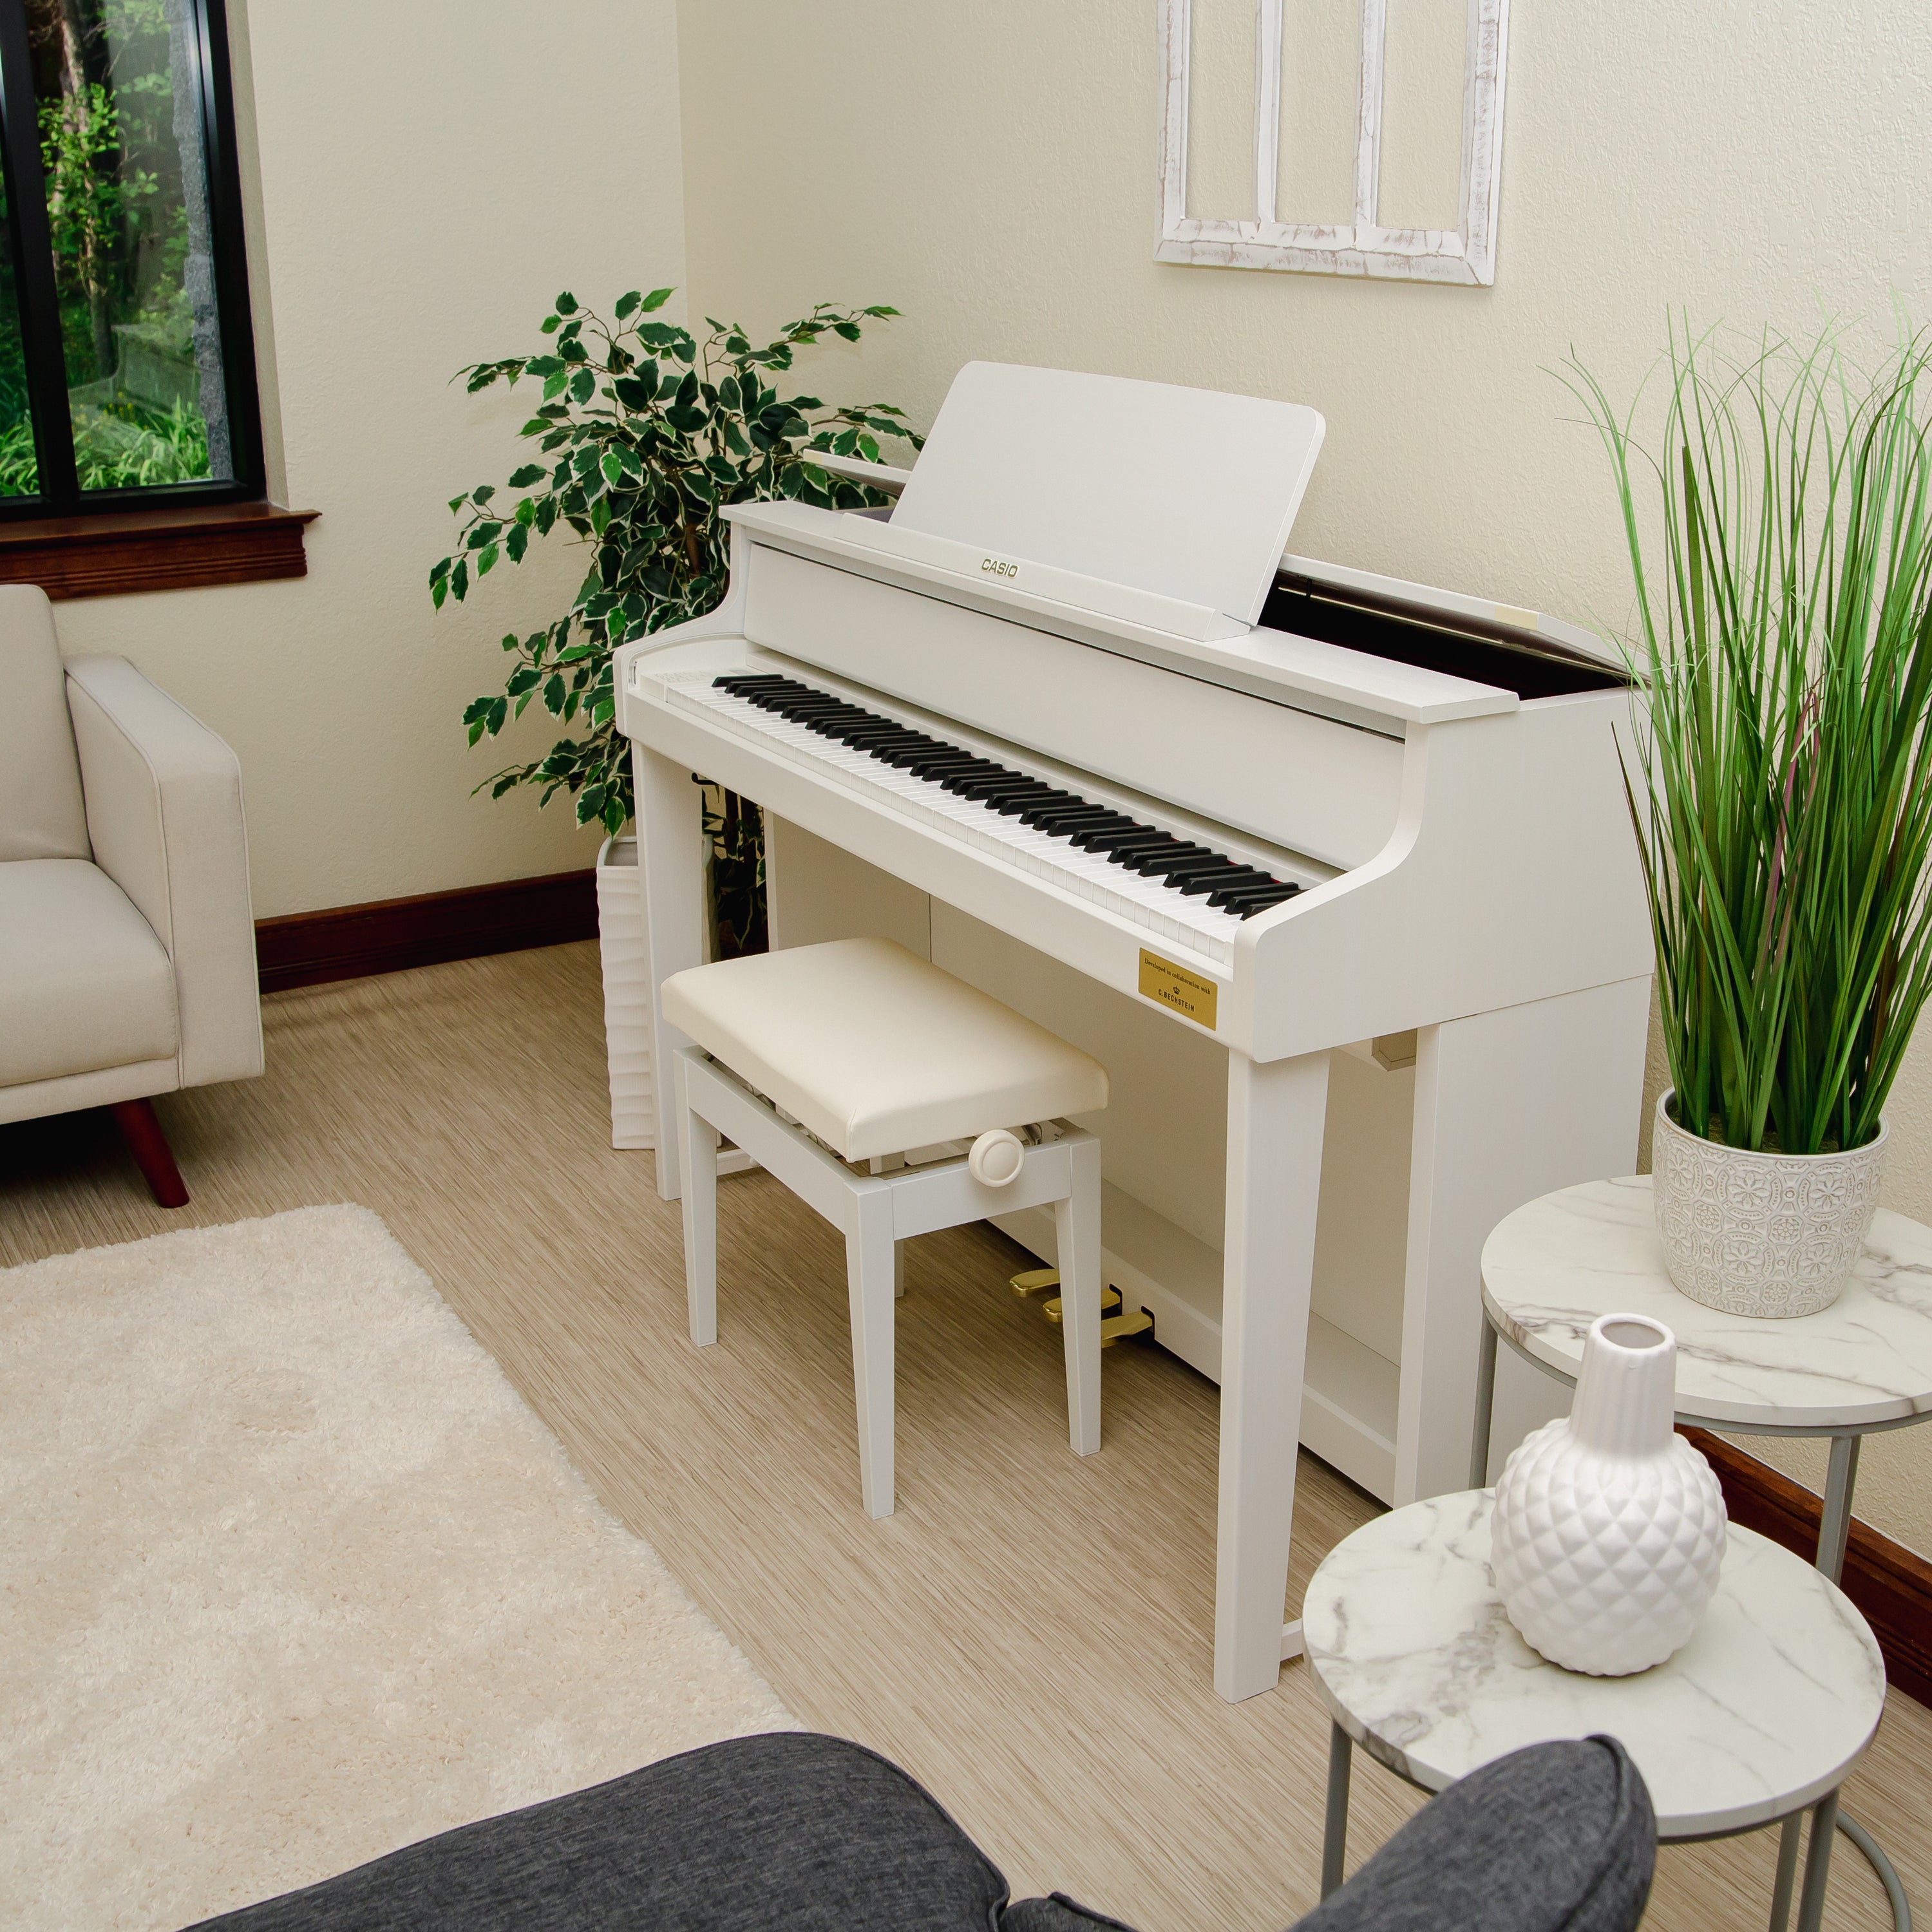 Casio Celviano Grand Hybrid GP-310 Digital Piano - Natural White Wood